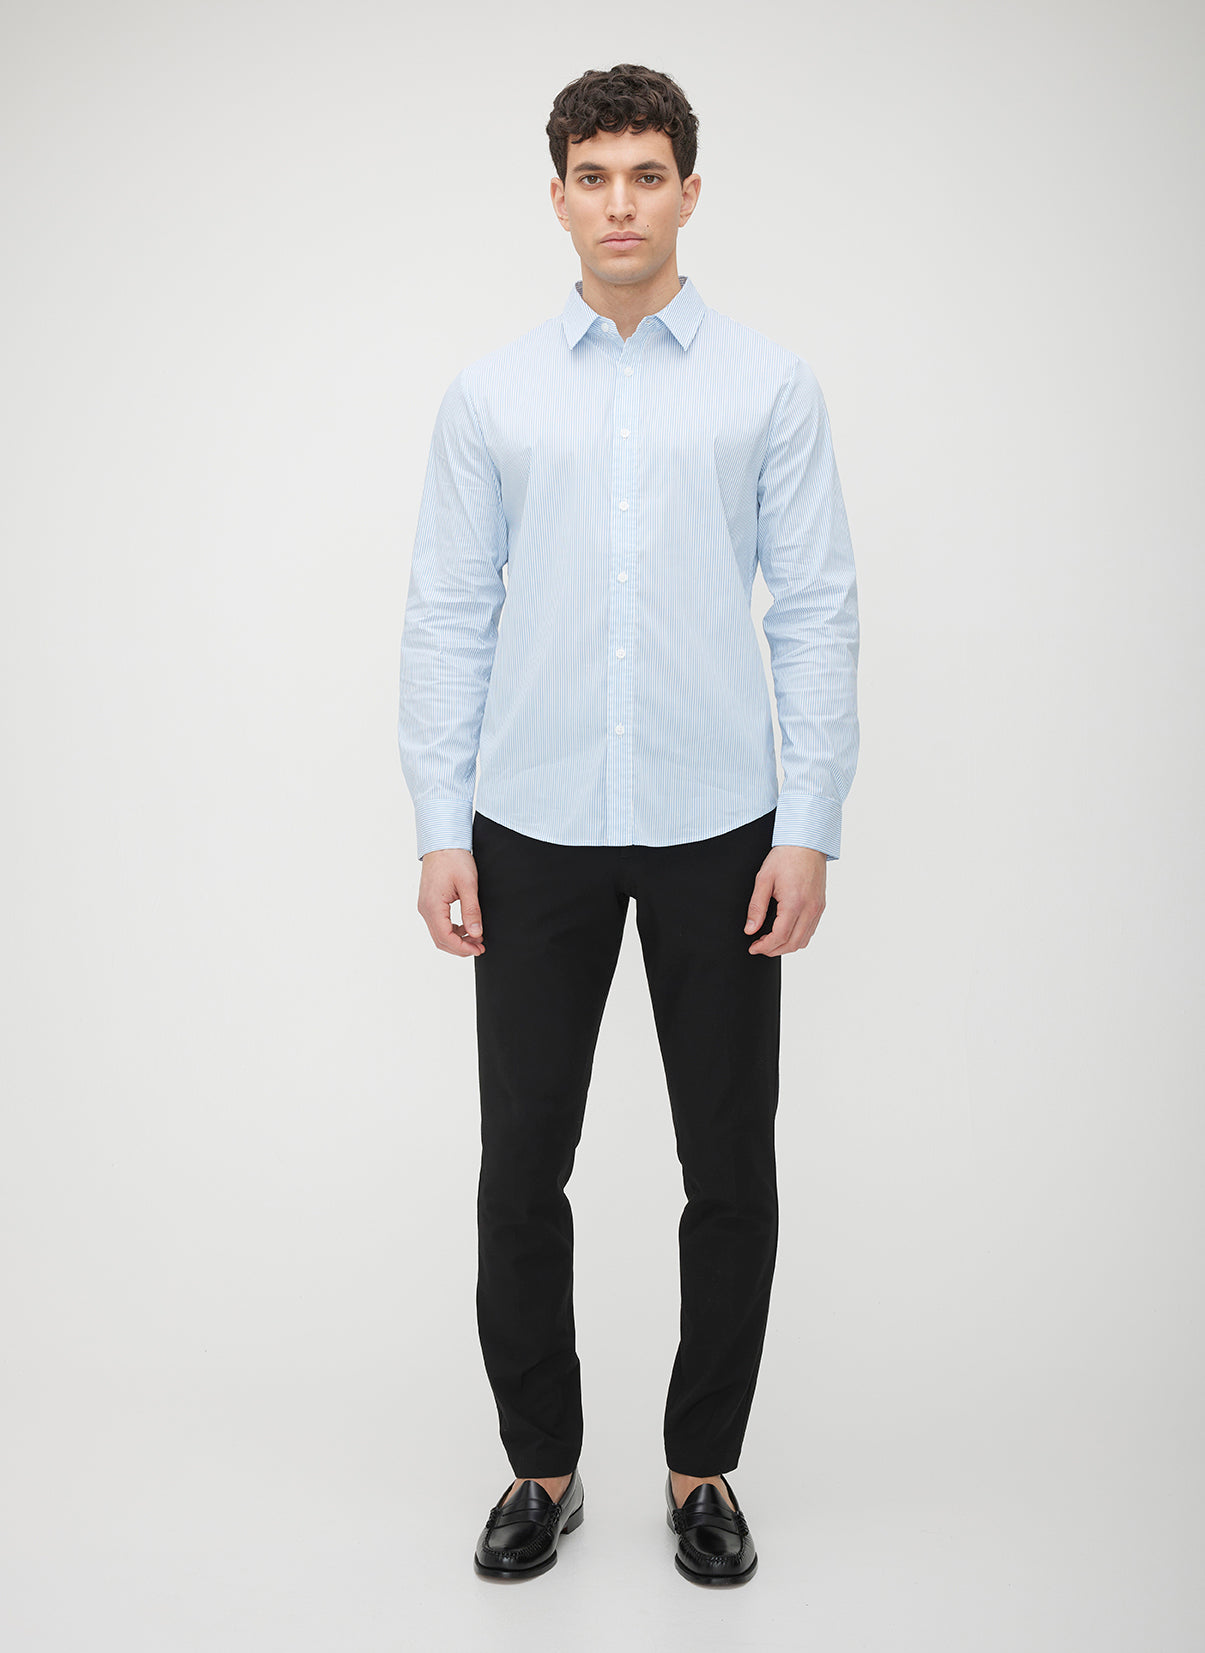 Kit and Ace — Acadia Long Sleeve Poplin Shirt